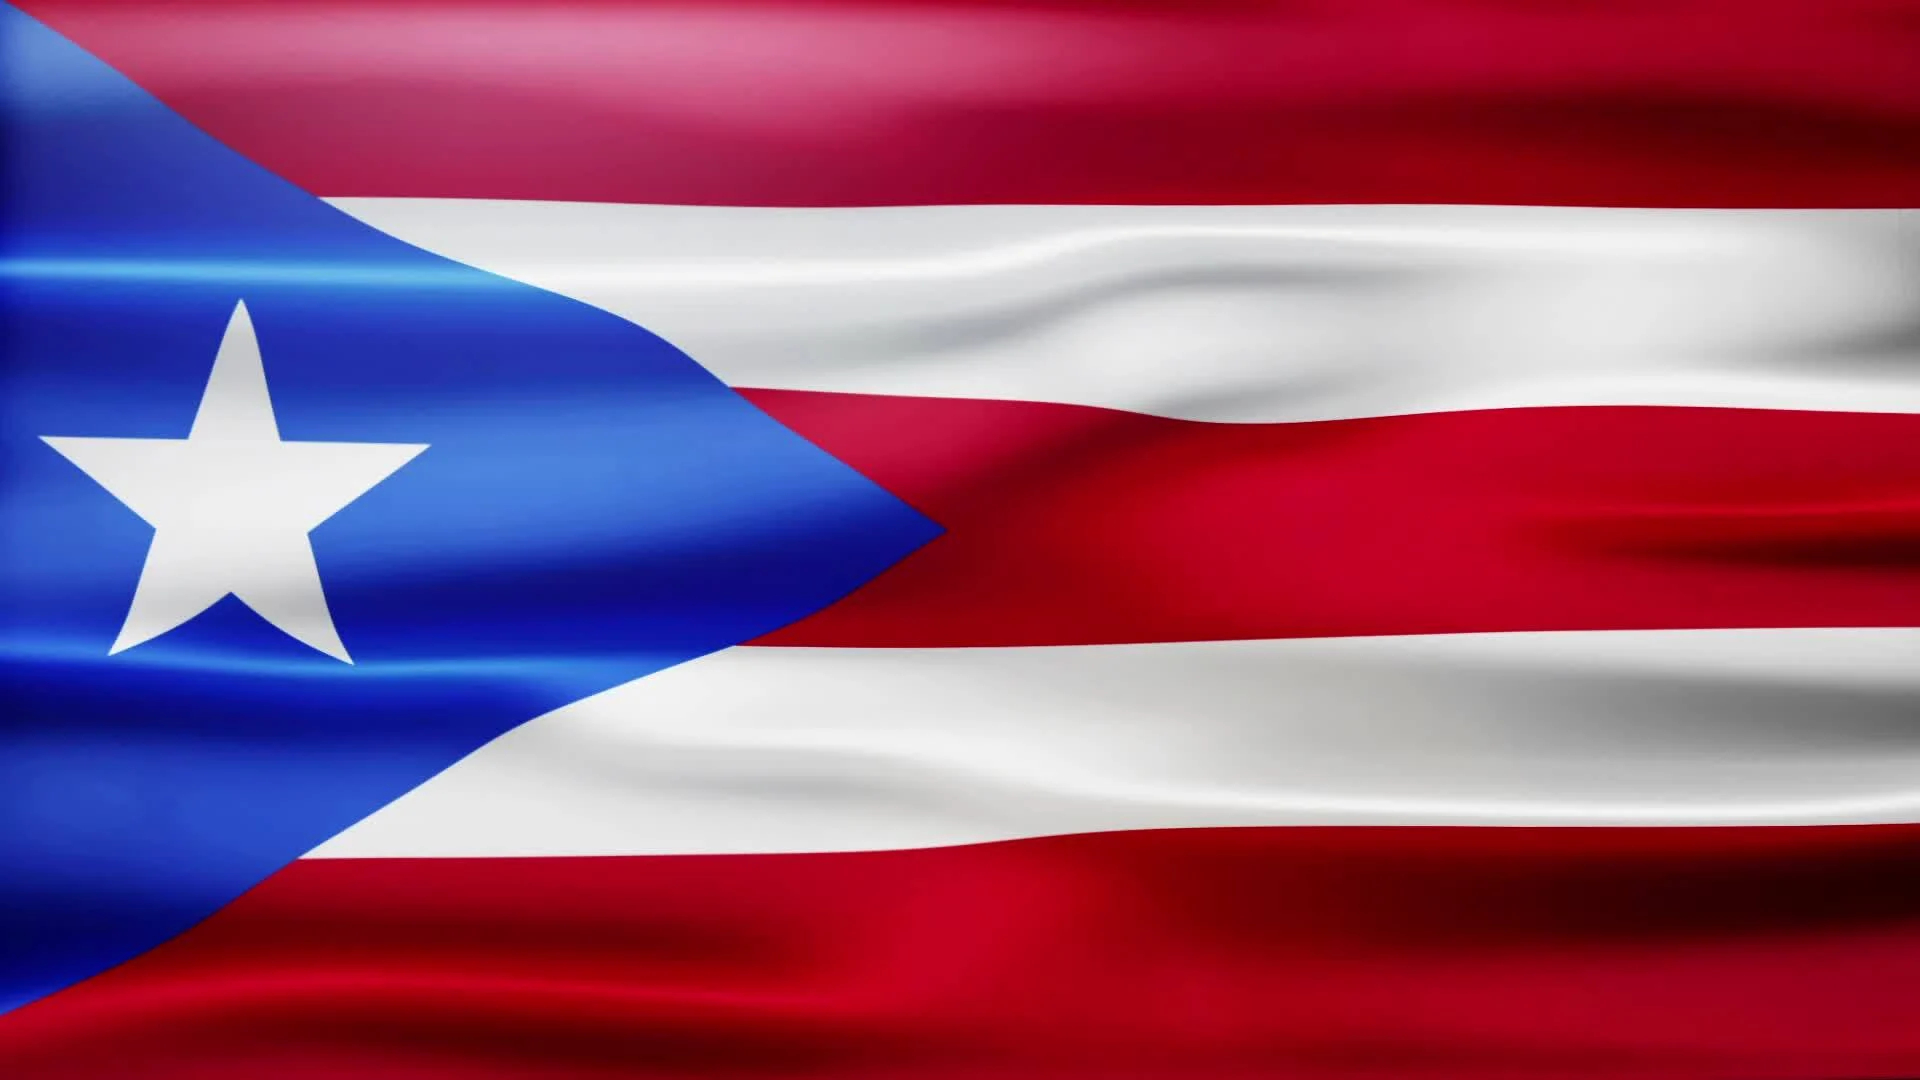 1920x1080 Puerto Rico Flag Loop Free HD Video Clips \u0026 Stock Video Footage at Videezy